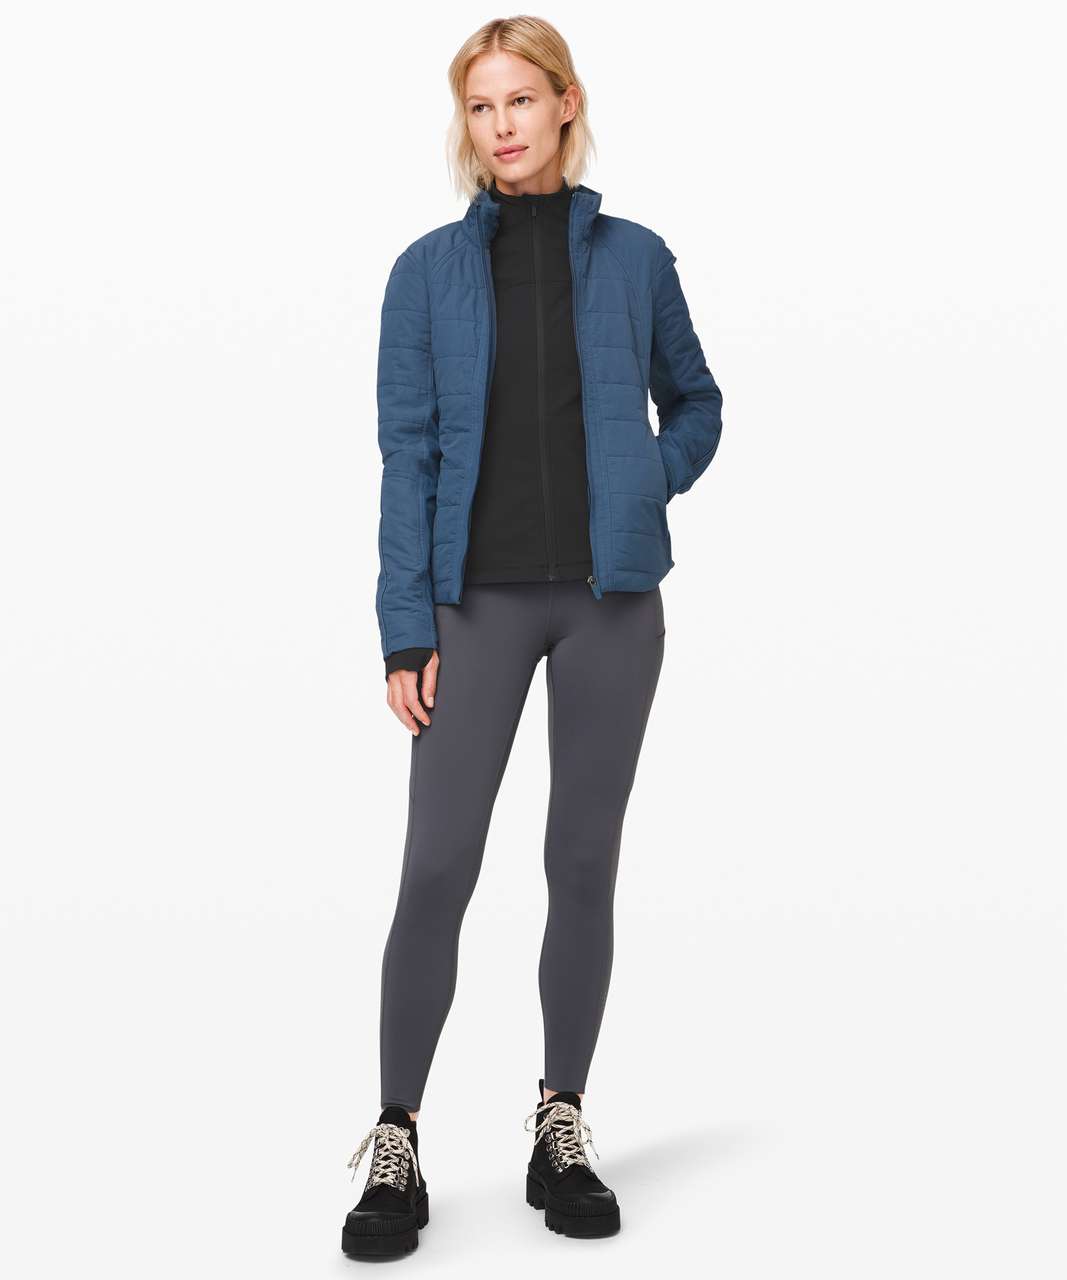 W2C lululemon define jacket : r/FashionReps